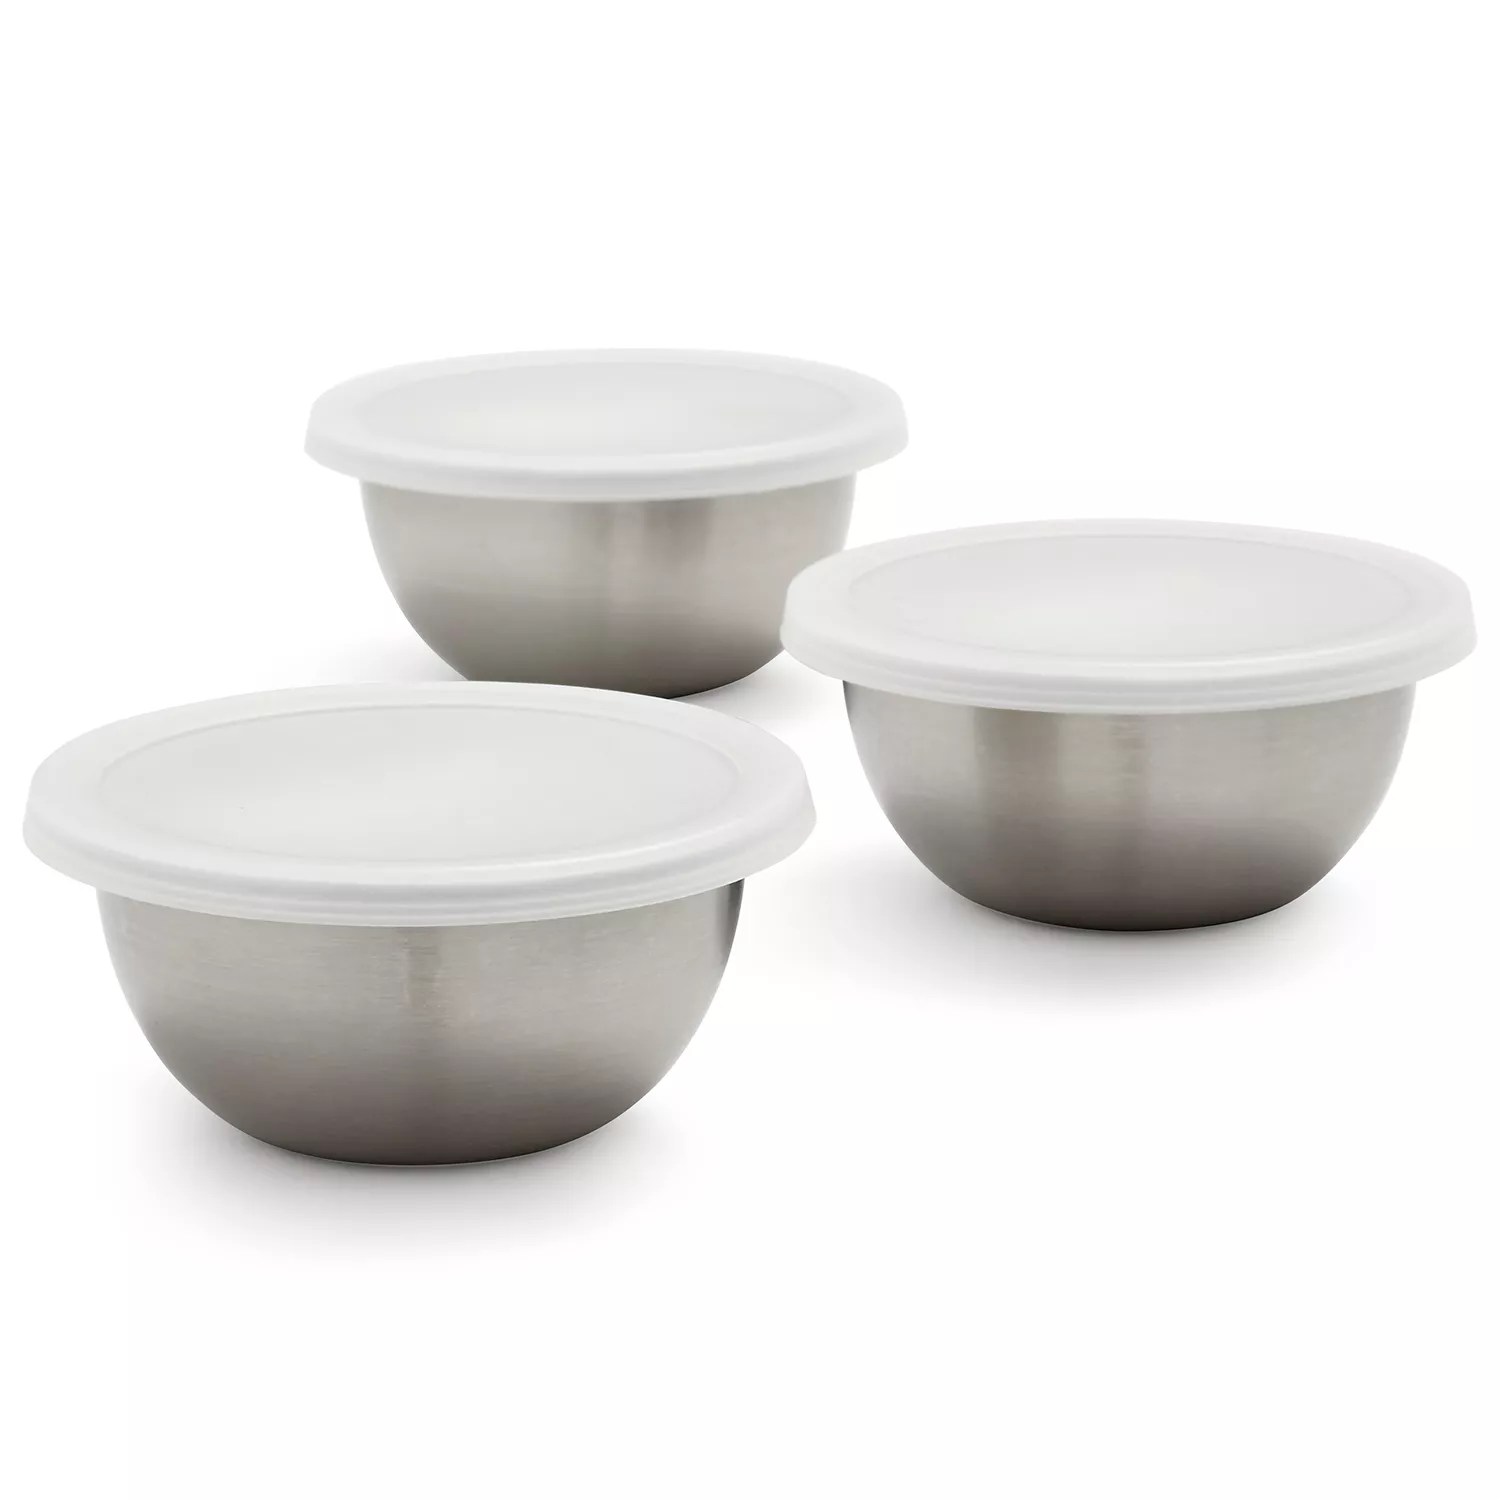 Babish Bowls, Mini Prep, Stainless Steel - 4 bowls